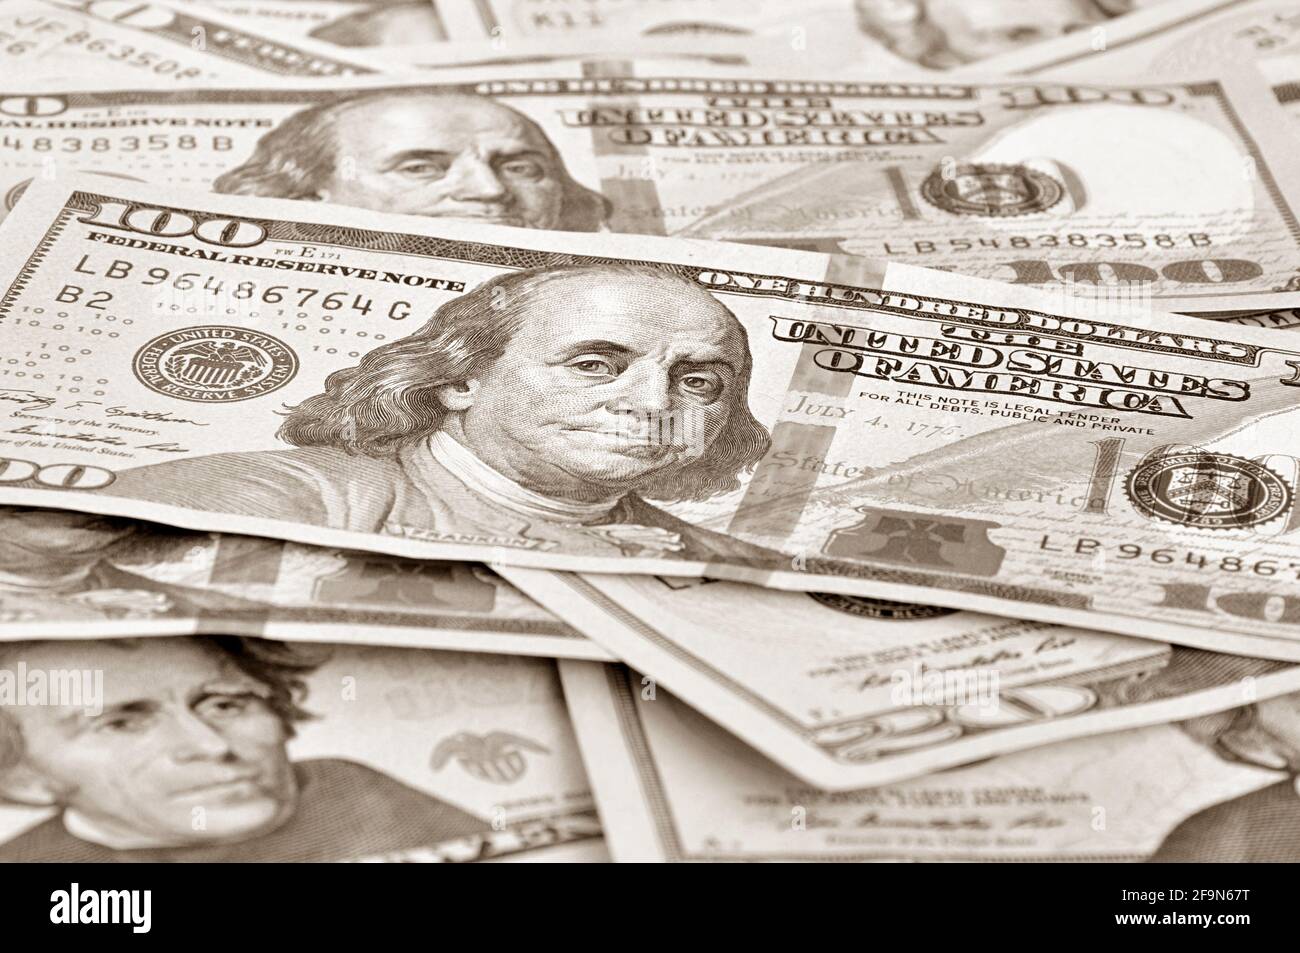 Money - United States dollars (USD) bills in retro style sepia effect Stock Photo